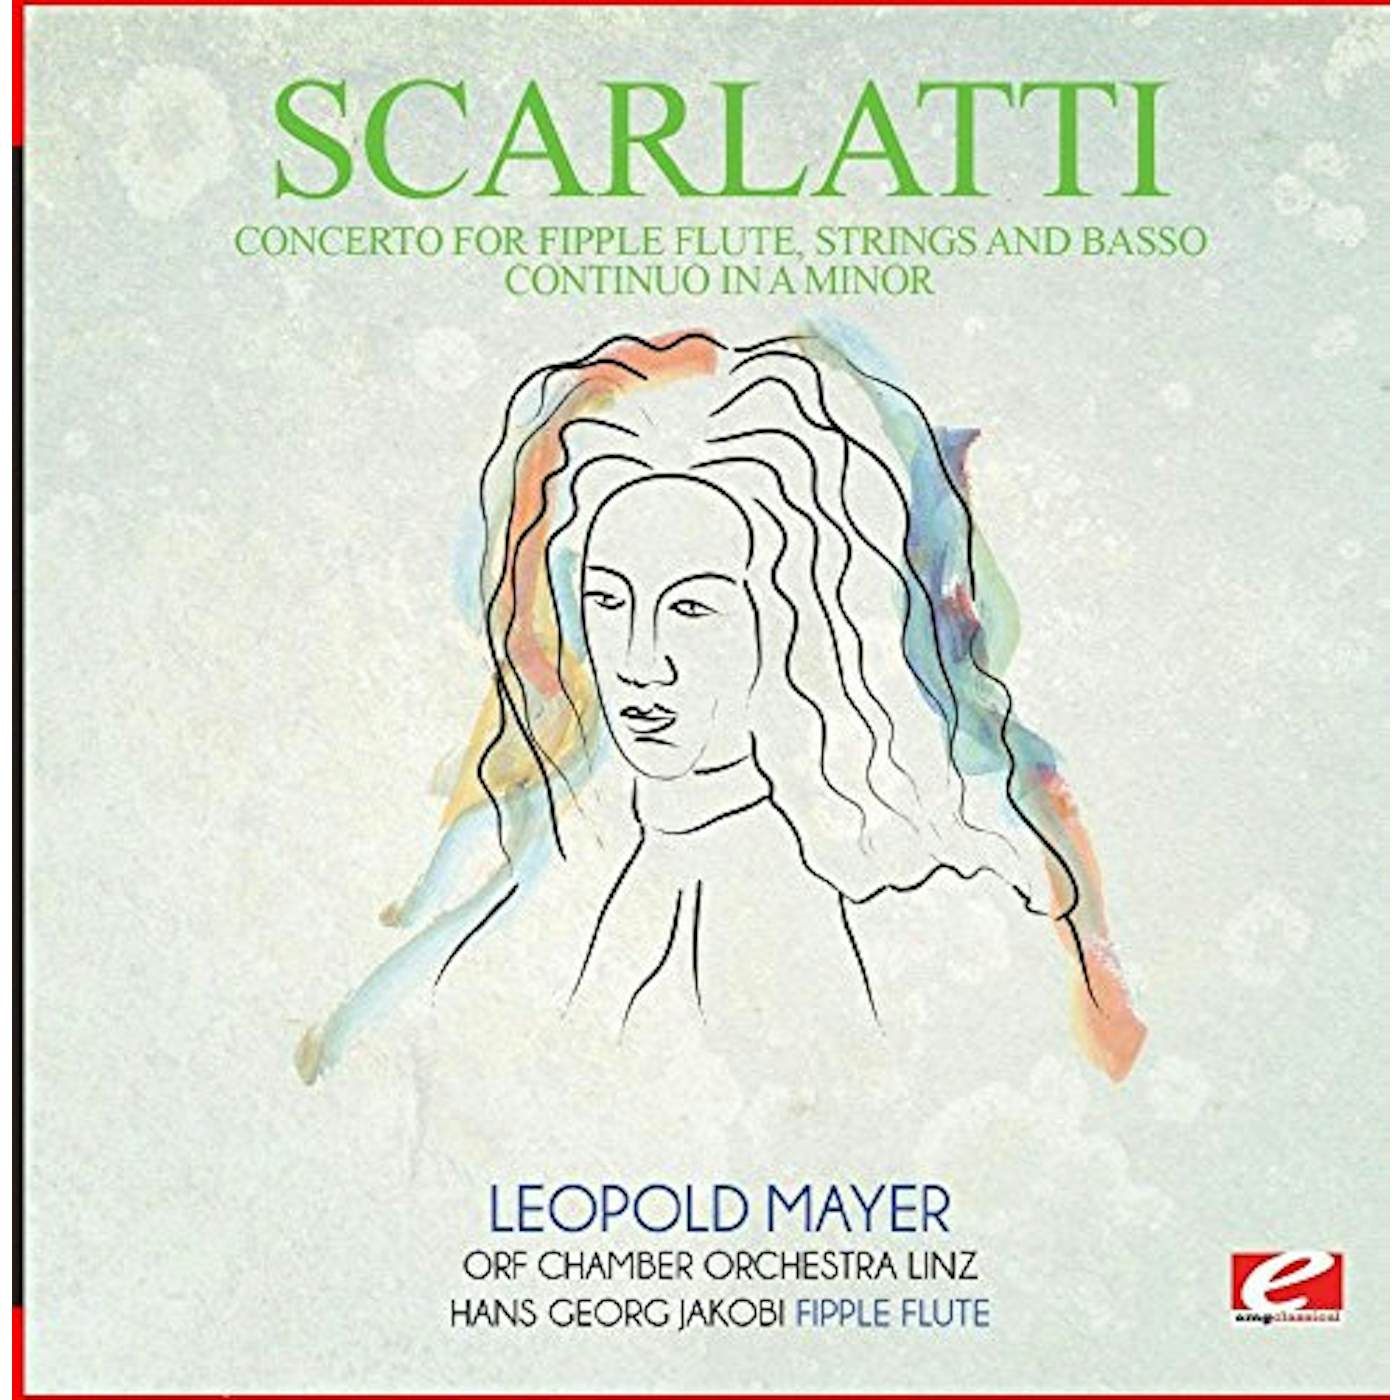 Scarlatti ALLEGRO FROM CONCERTO FOR FIPPLE FLUTE STRINGS CD